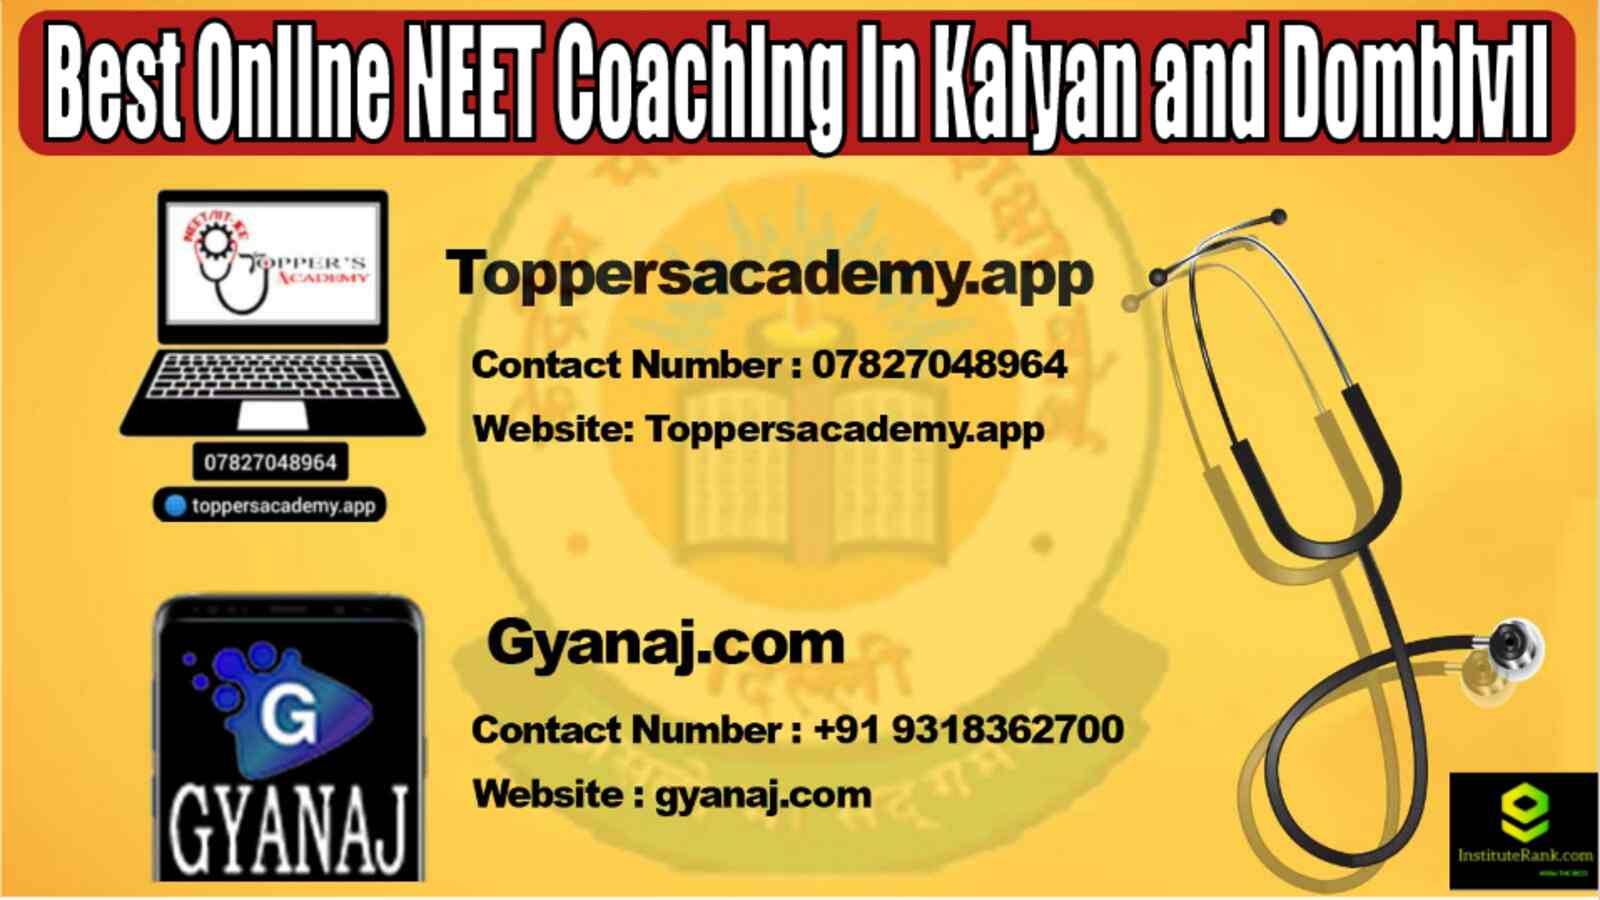 Best Online NEET Coaching in Kalyan and Dombivli 2022